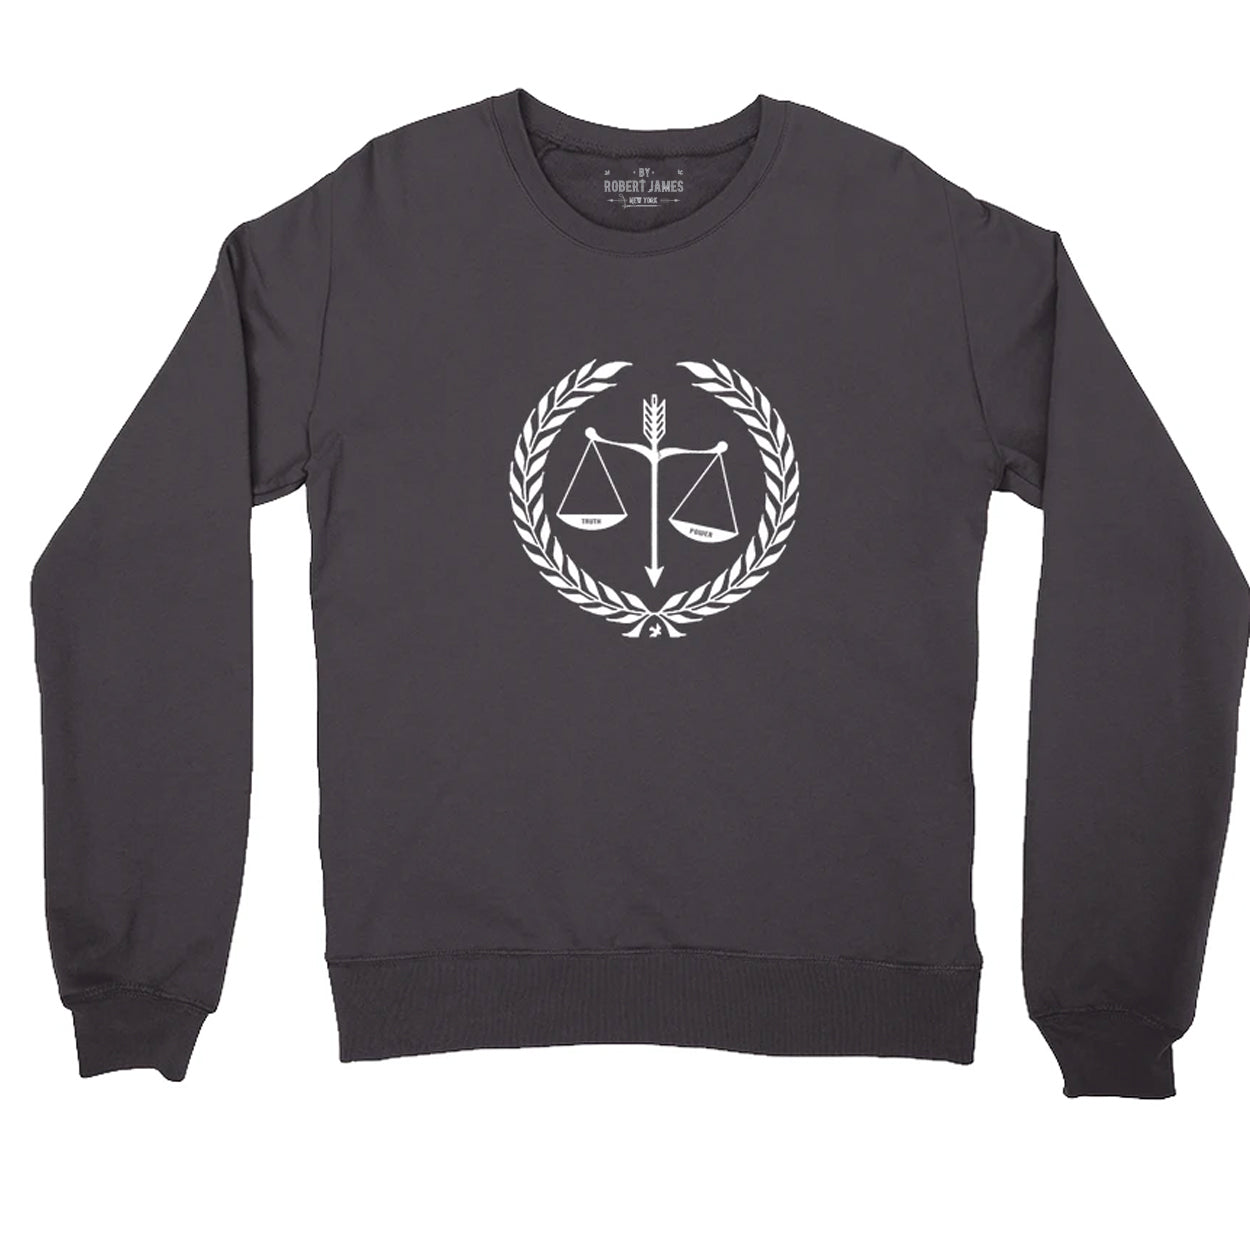 TRUTH IN JUSTICE // Sweatshirts